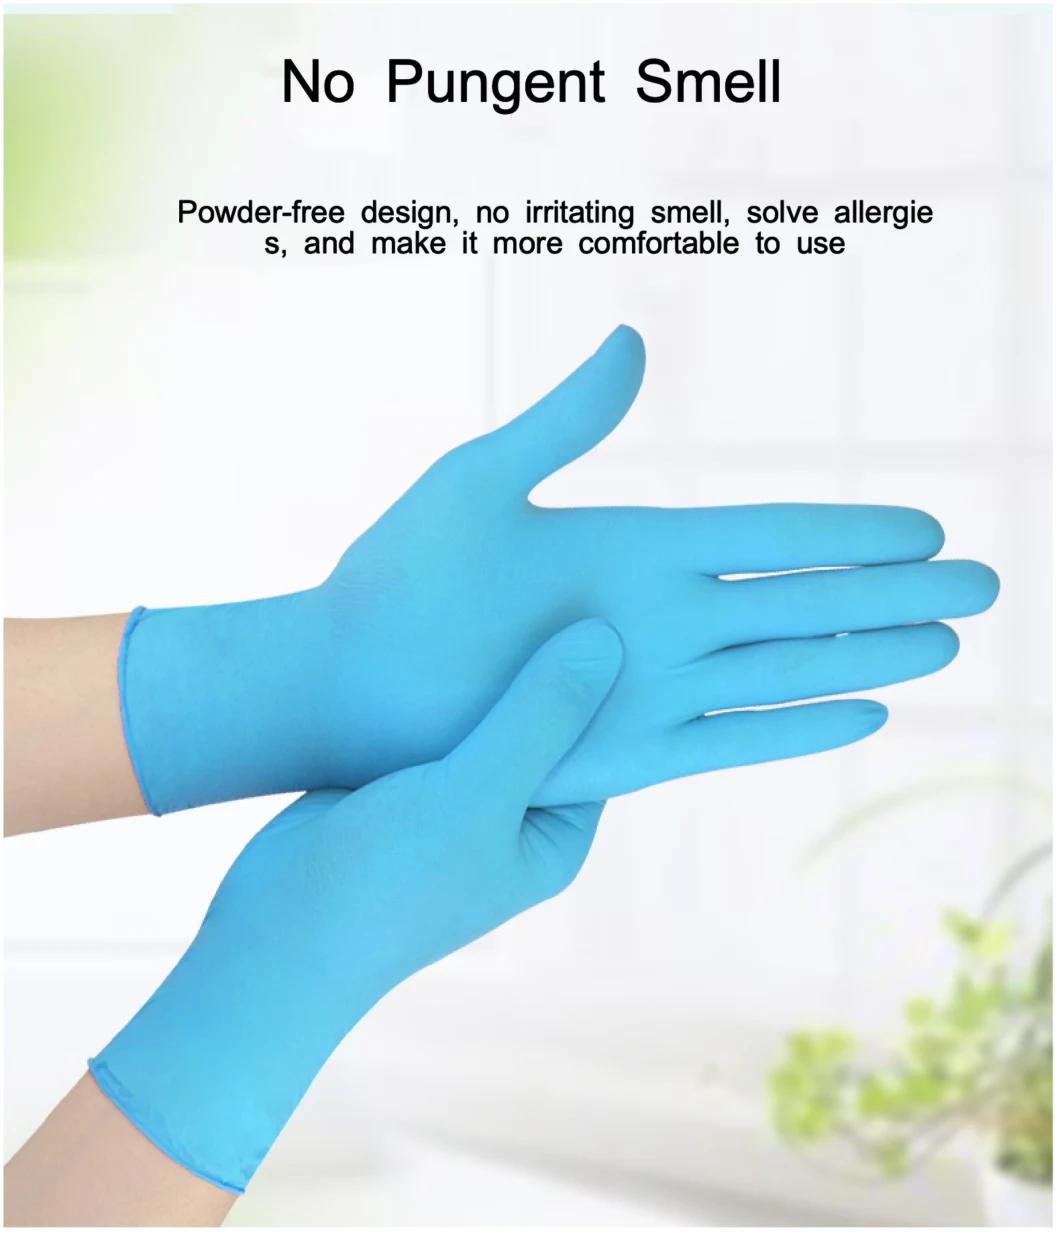 510K En455 Powder Free Disposable Nitrile Examination Gloves with Free Sample